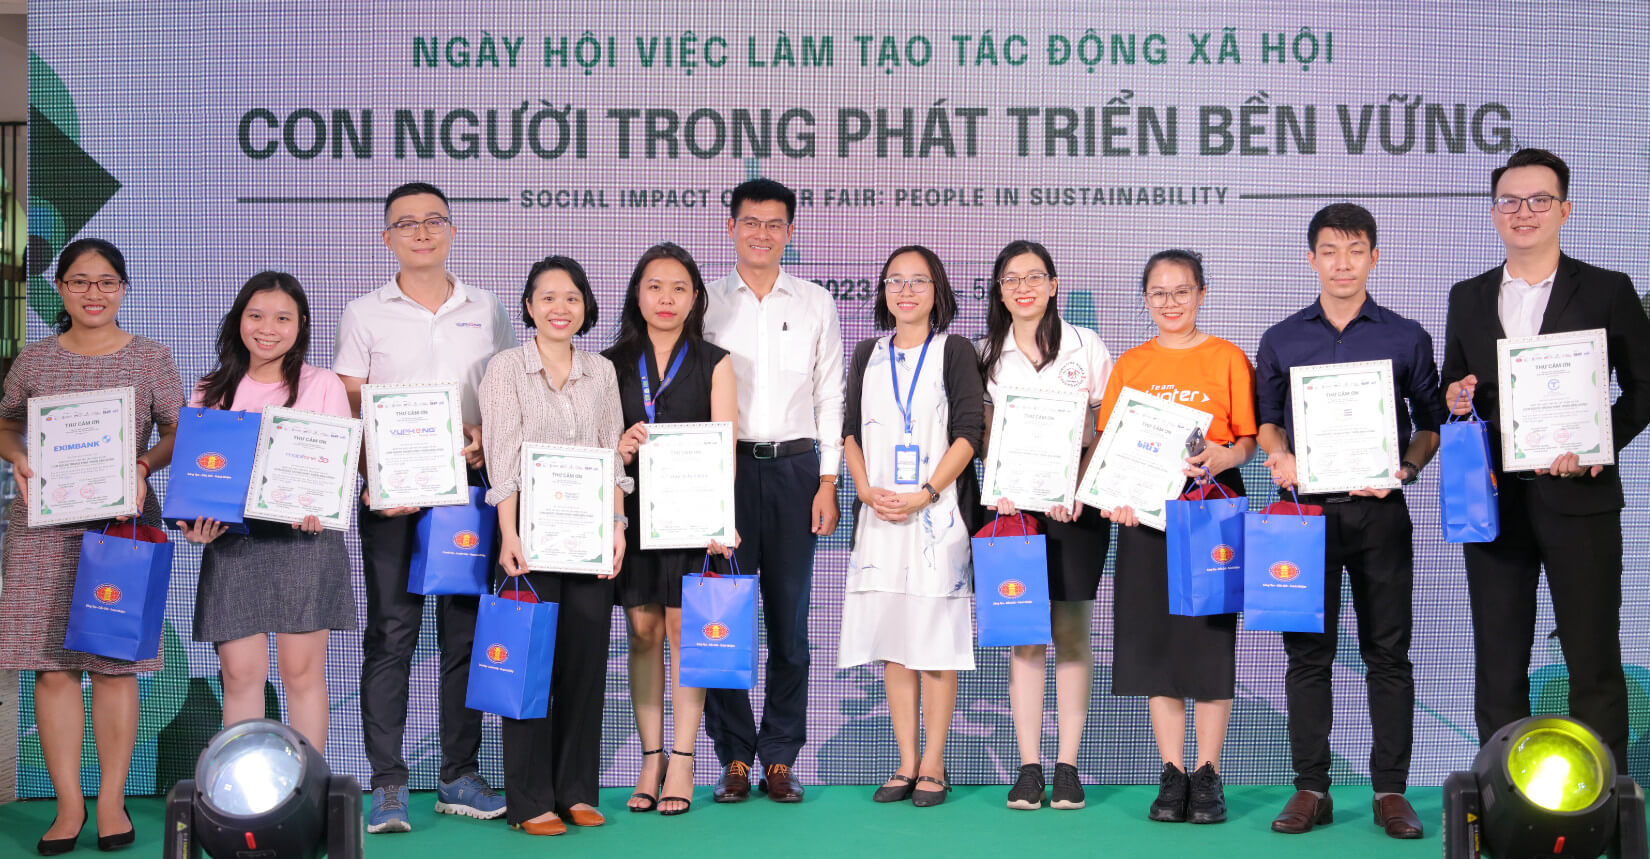 Mr. An, Pham Dang, Vice General Director of Vu Phong Energy Group